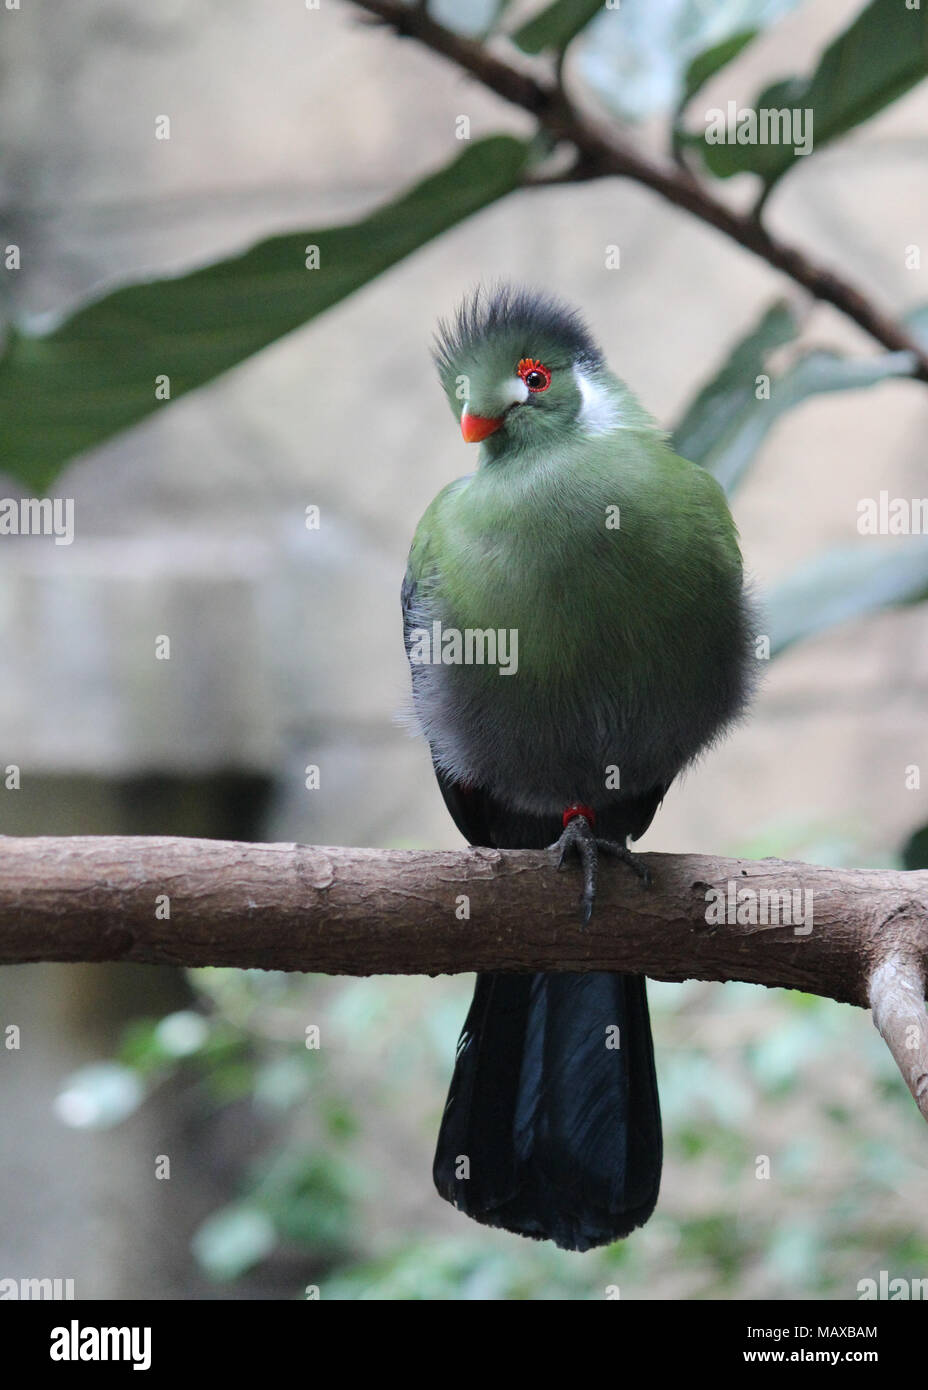 Quizzical Green Bird Stock Photo